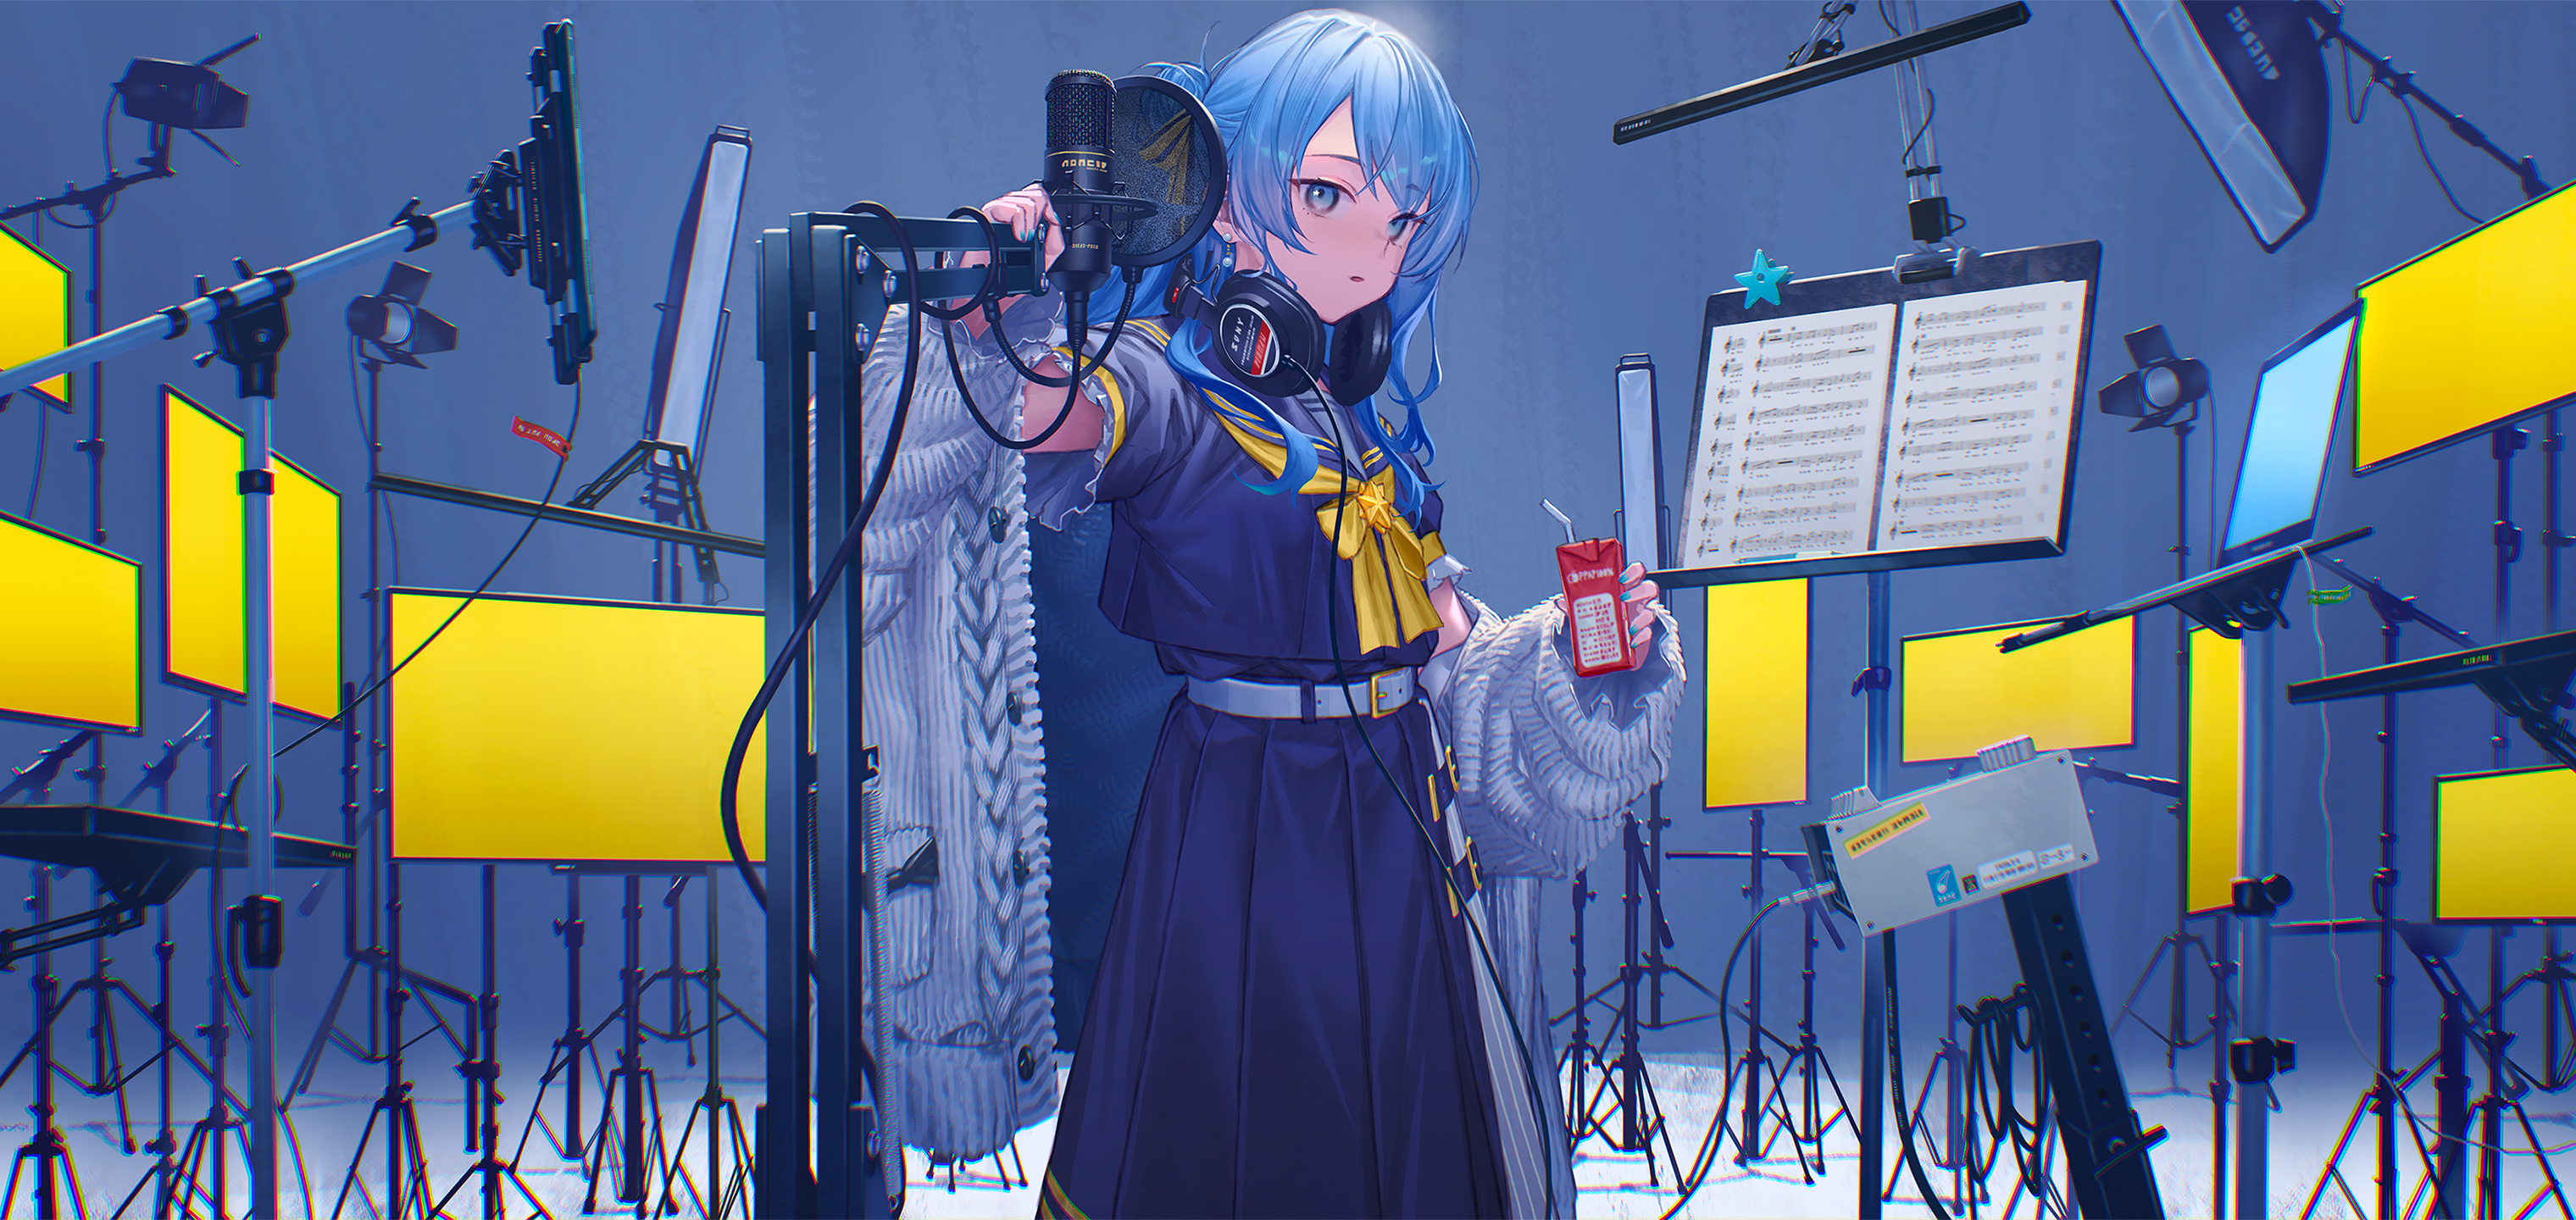 Anime anime girls hololive virtual youtuber hoshimachi suisei blue hair blue eyes headphones wallpaper